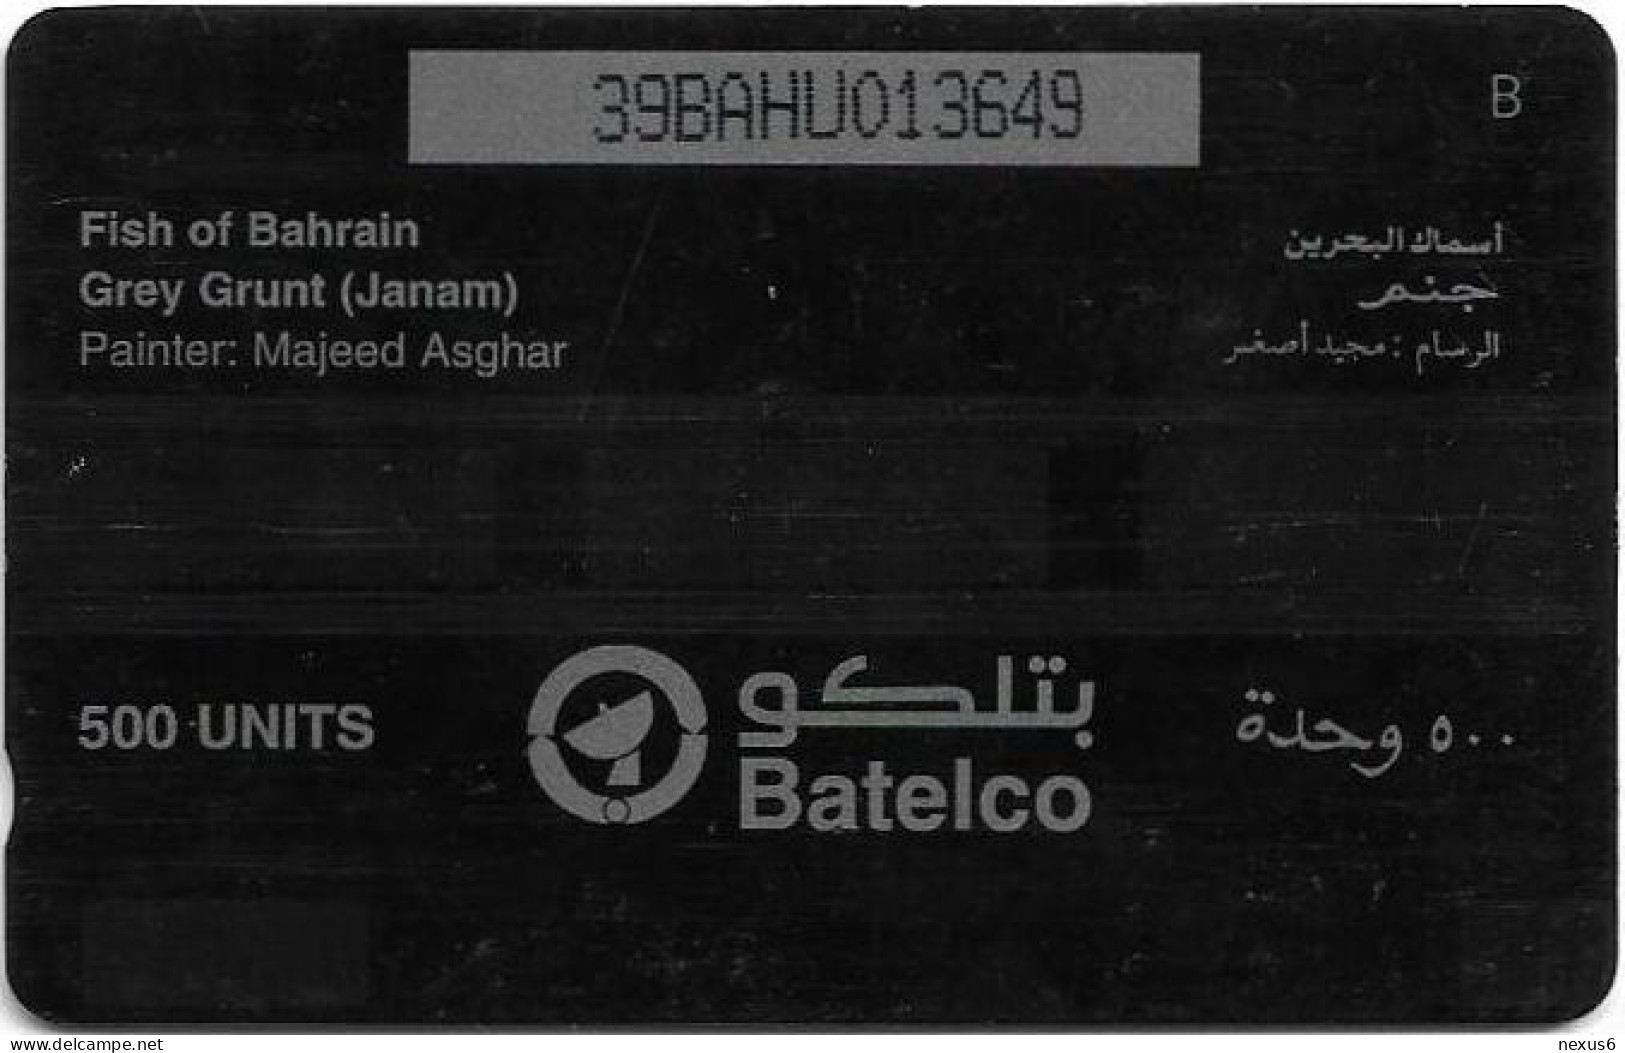 Bahrain - Batelco (GPT) - Fish Of Bahrain - Grey Grunt - 39BAHU (Normal 0, Round Top ''3''), 1996, 500U, Used - Bahrain